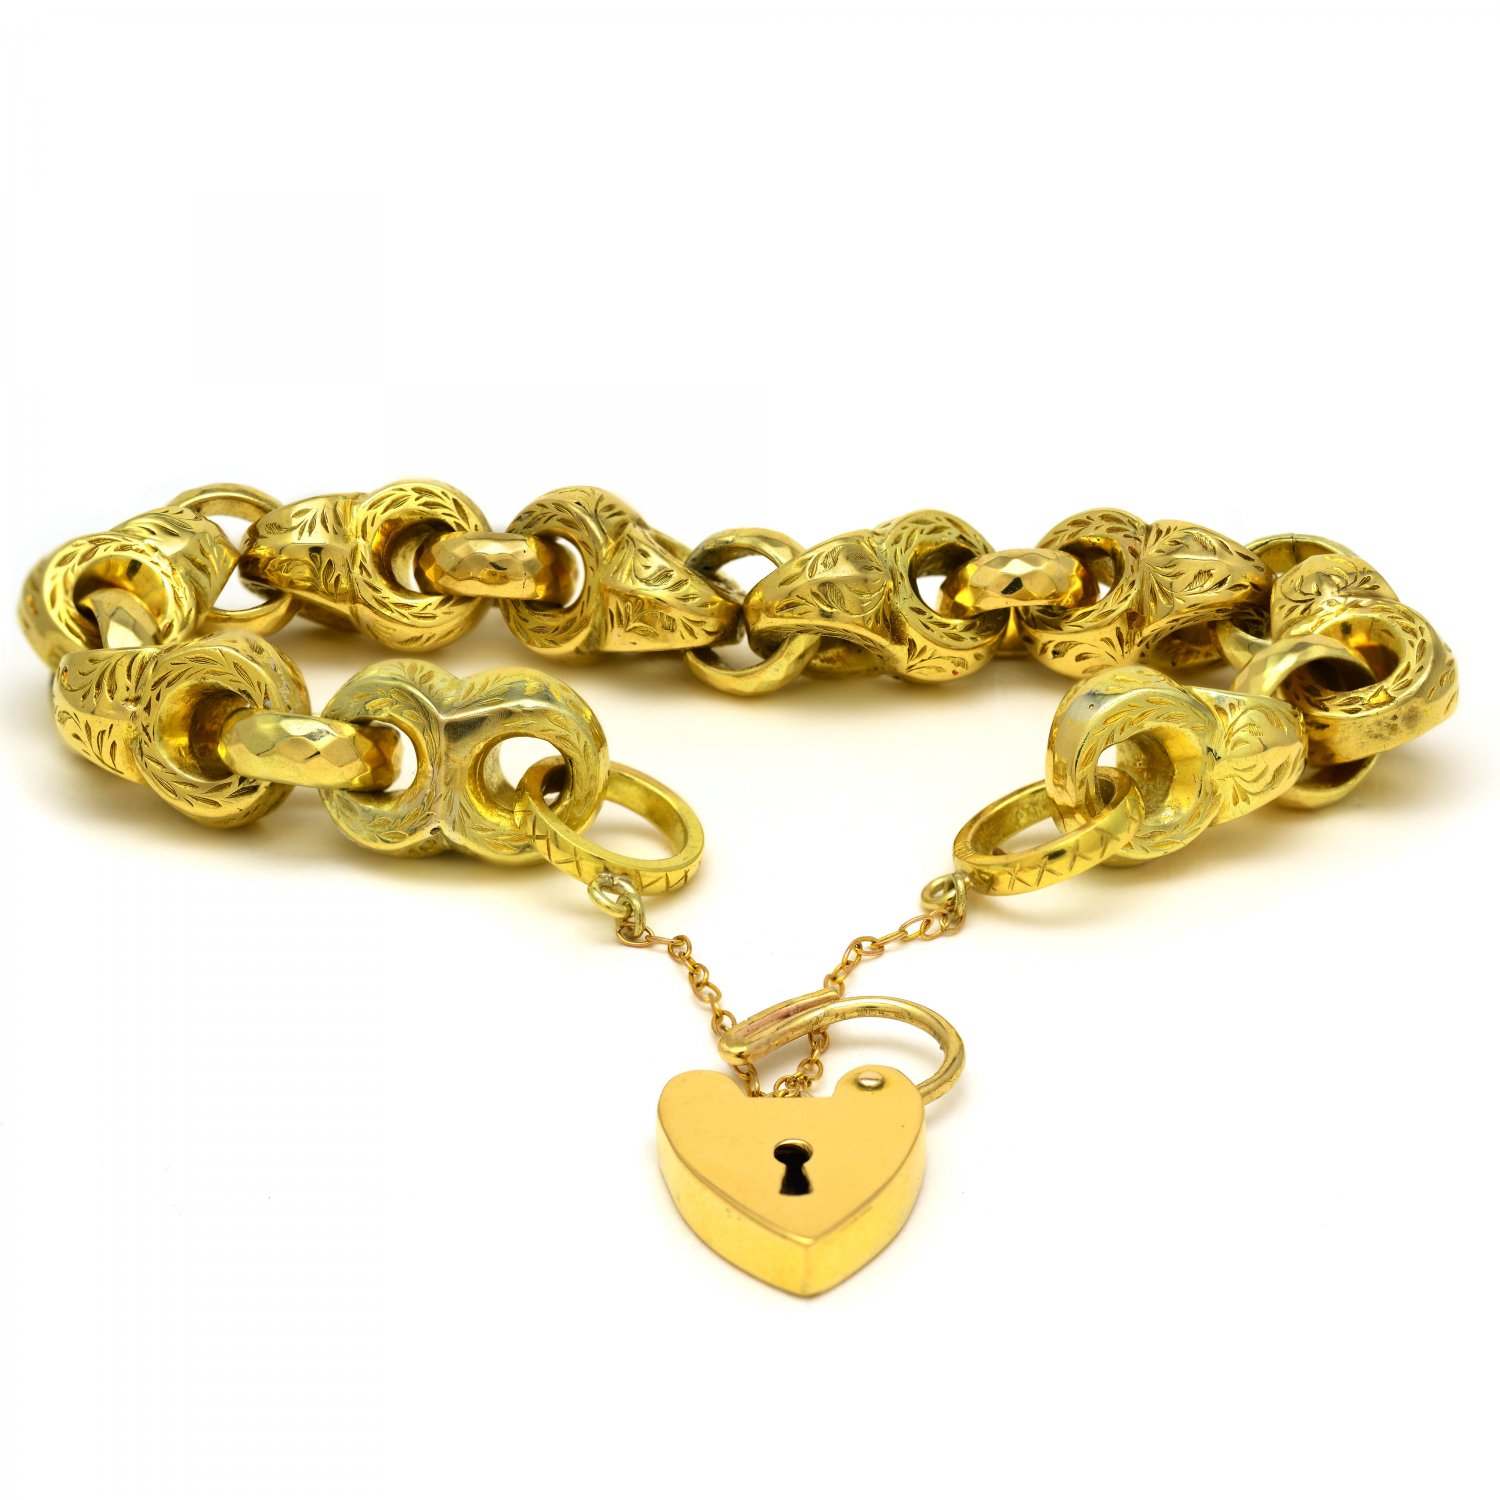 18ct Gold Victorian Padlock Bracelet